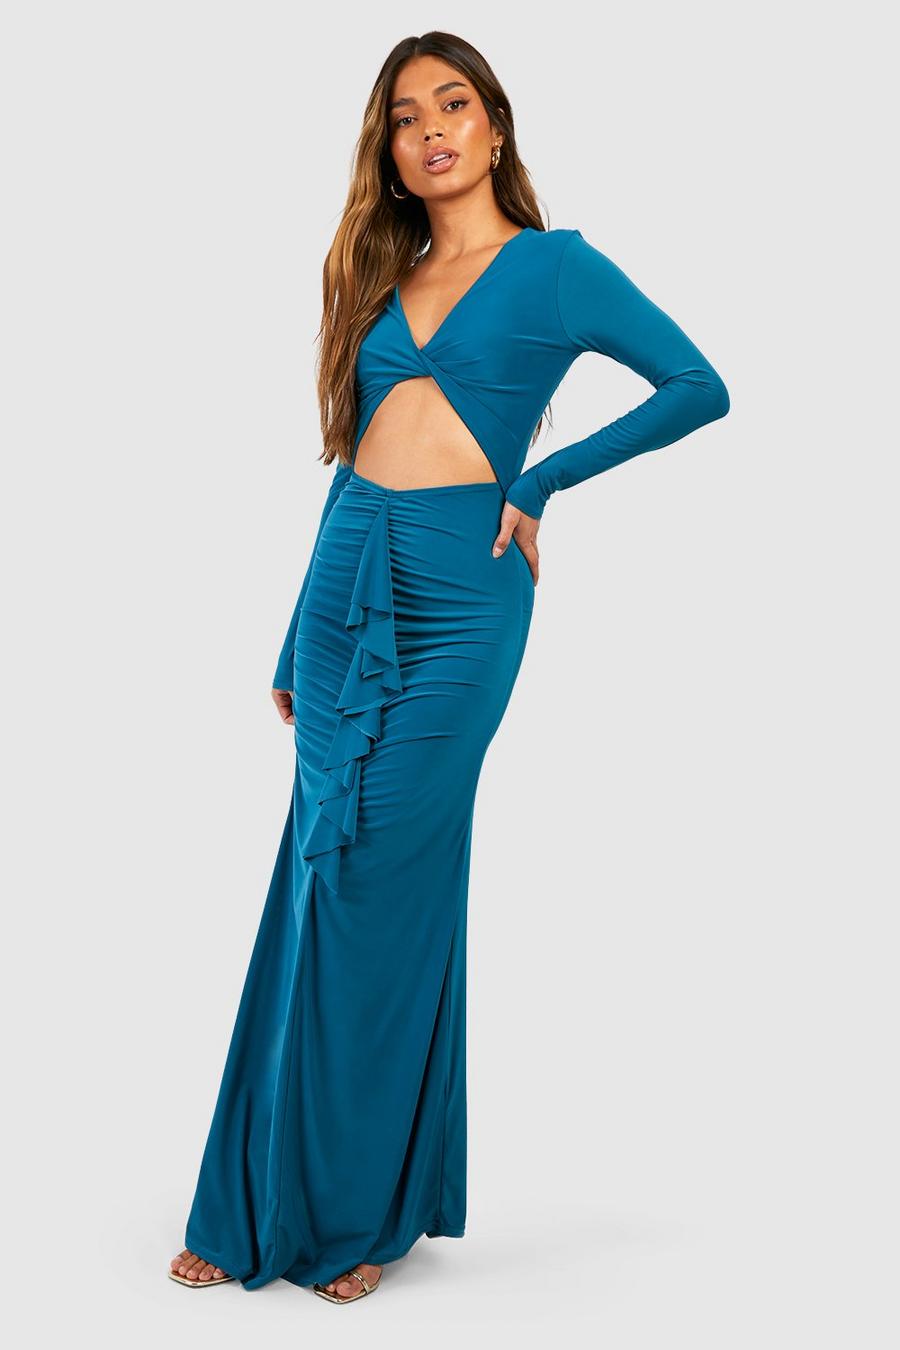 Slate blue Double Slinky Long Sleeve Ruched Midaxi Dress